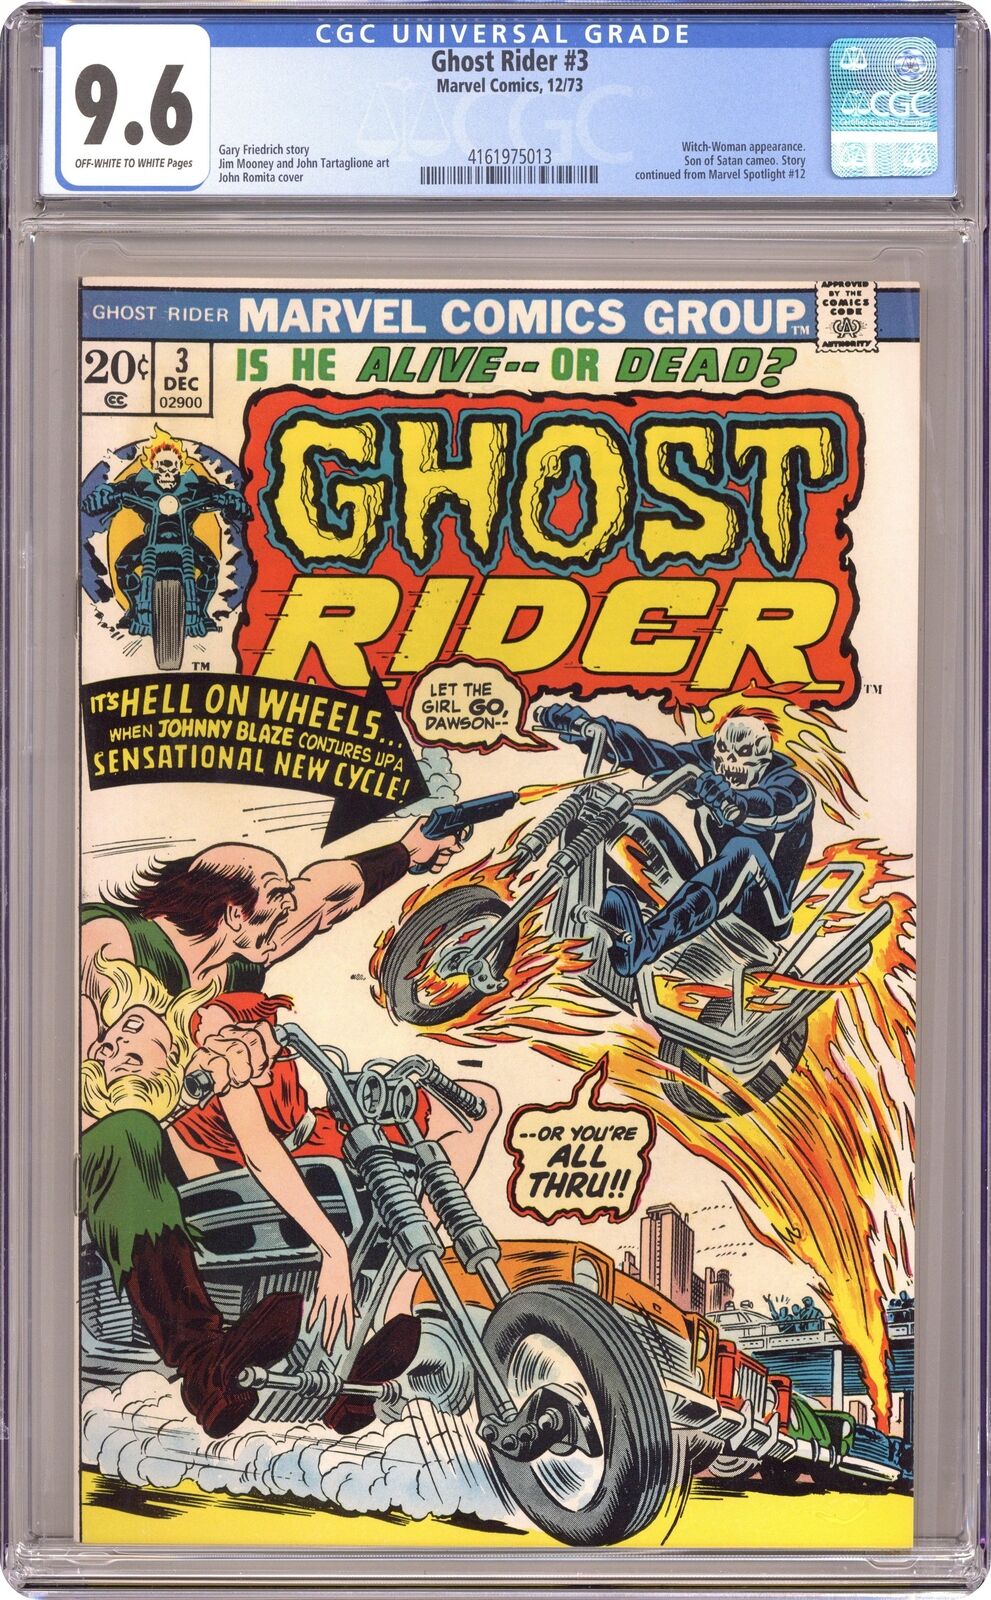 Ghost Rider #3 CGC 9.6 1973 4161975013